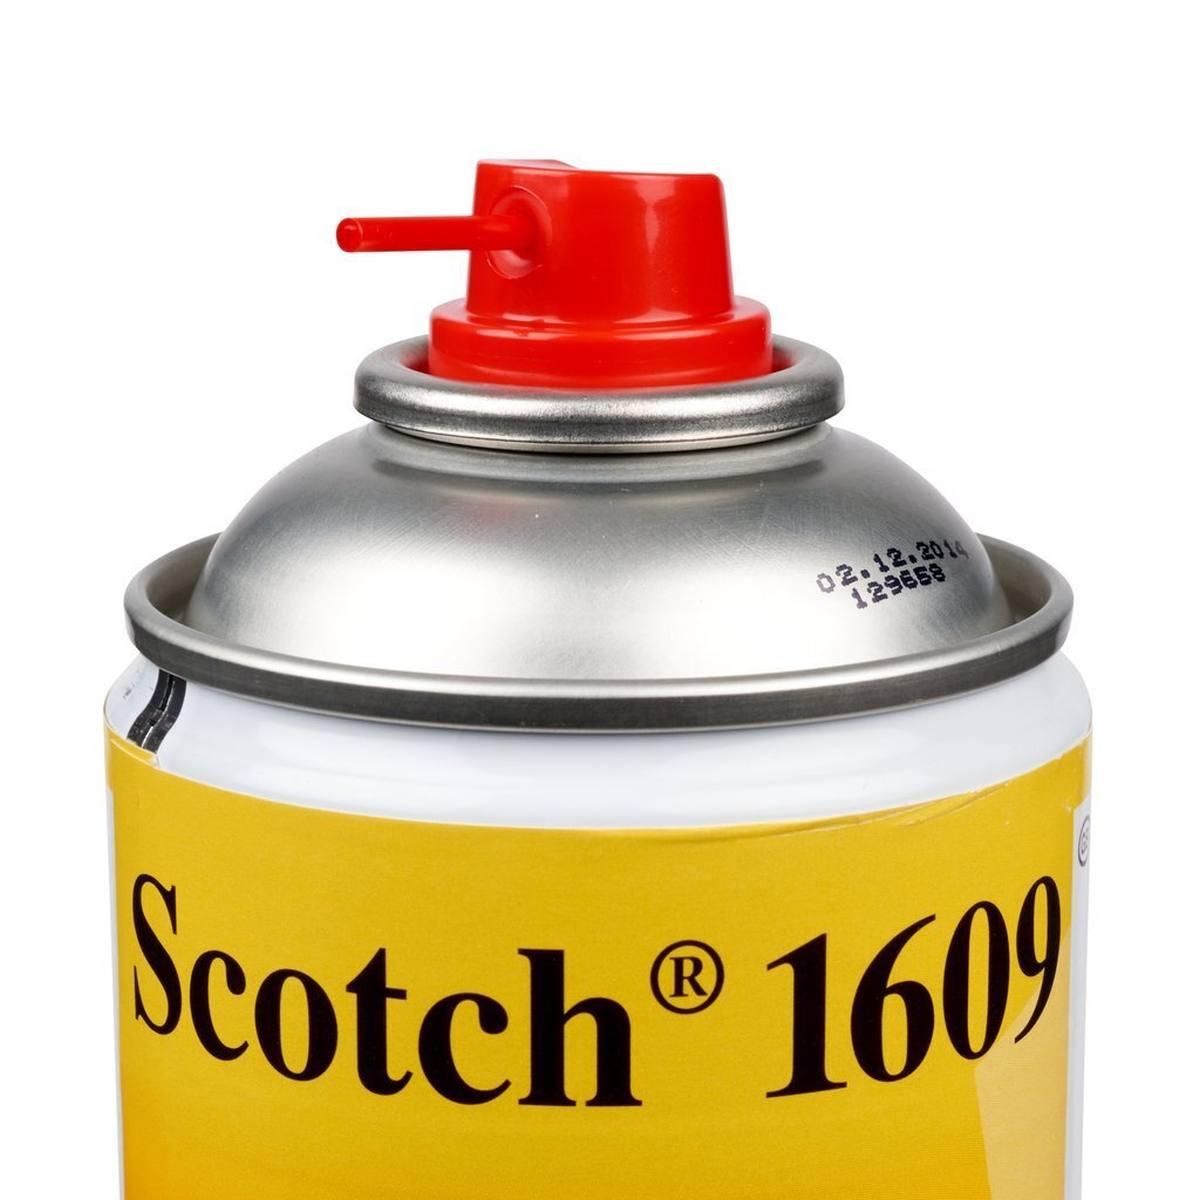 3M Scotch 1609 Yleissilikonsuihke, 400 ml